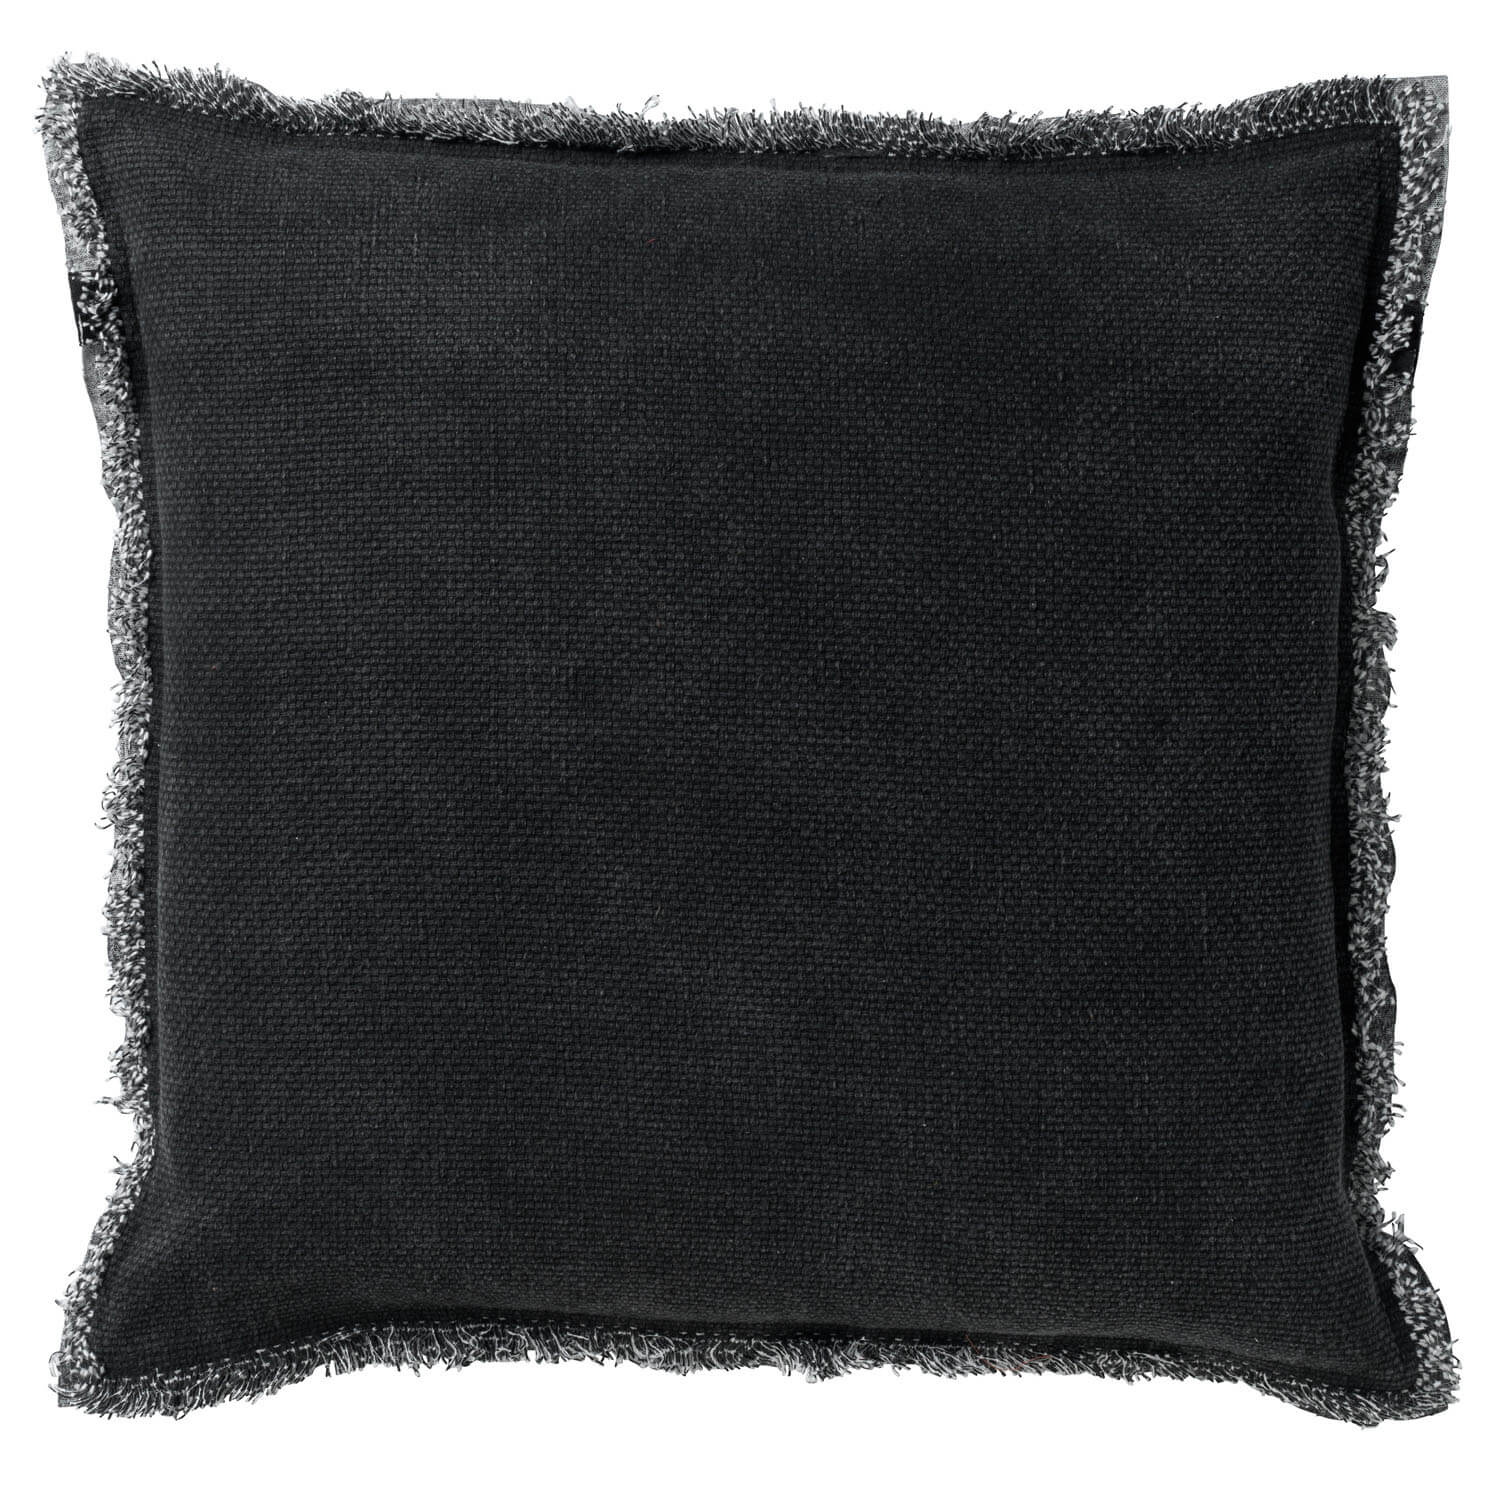 BURTO - Cushion 60x60 cm Raven - black 